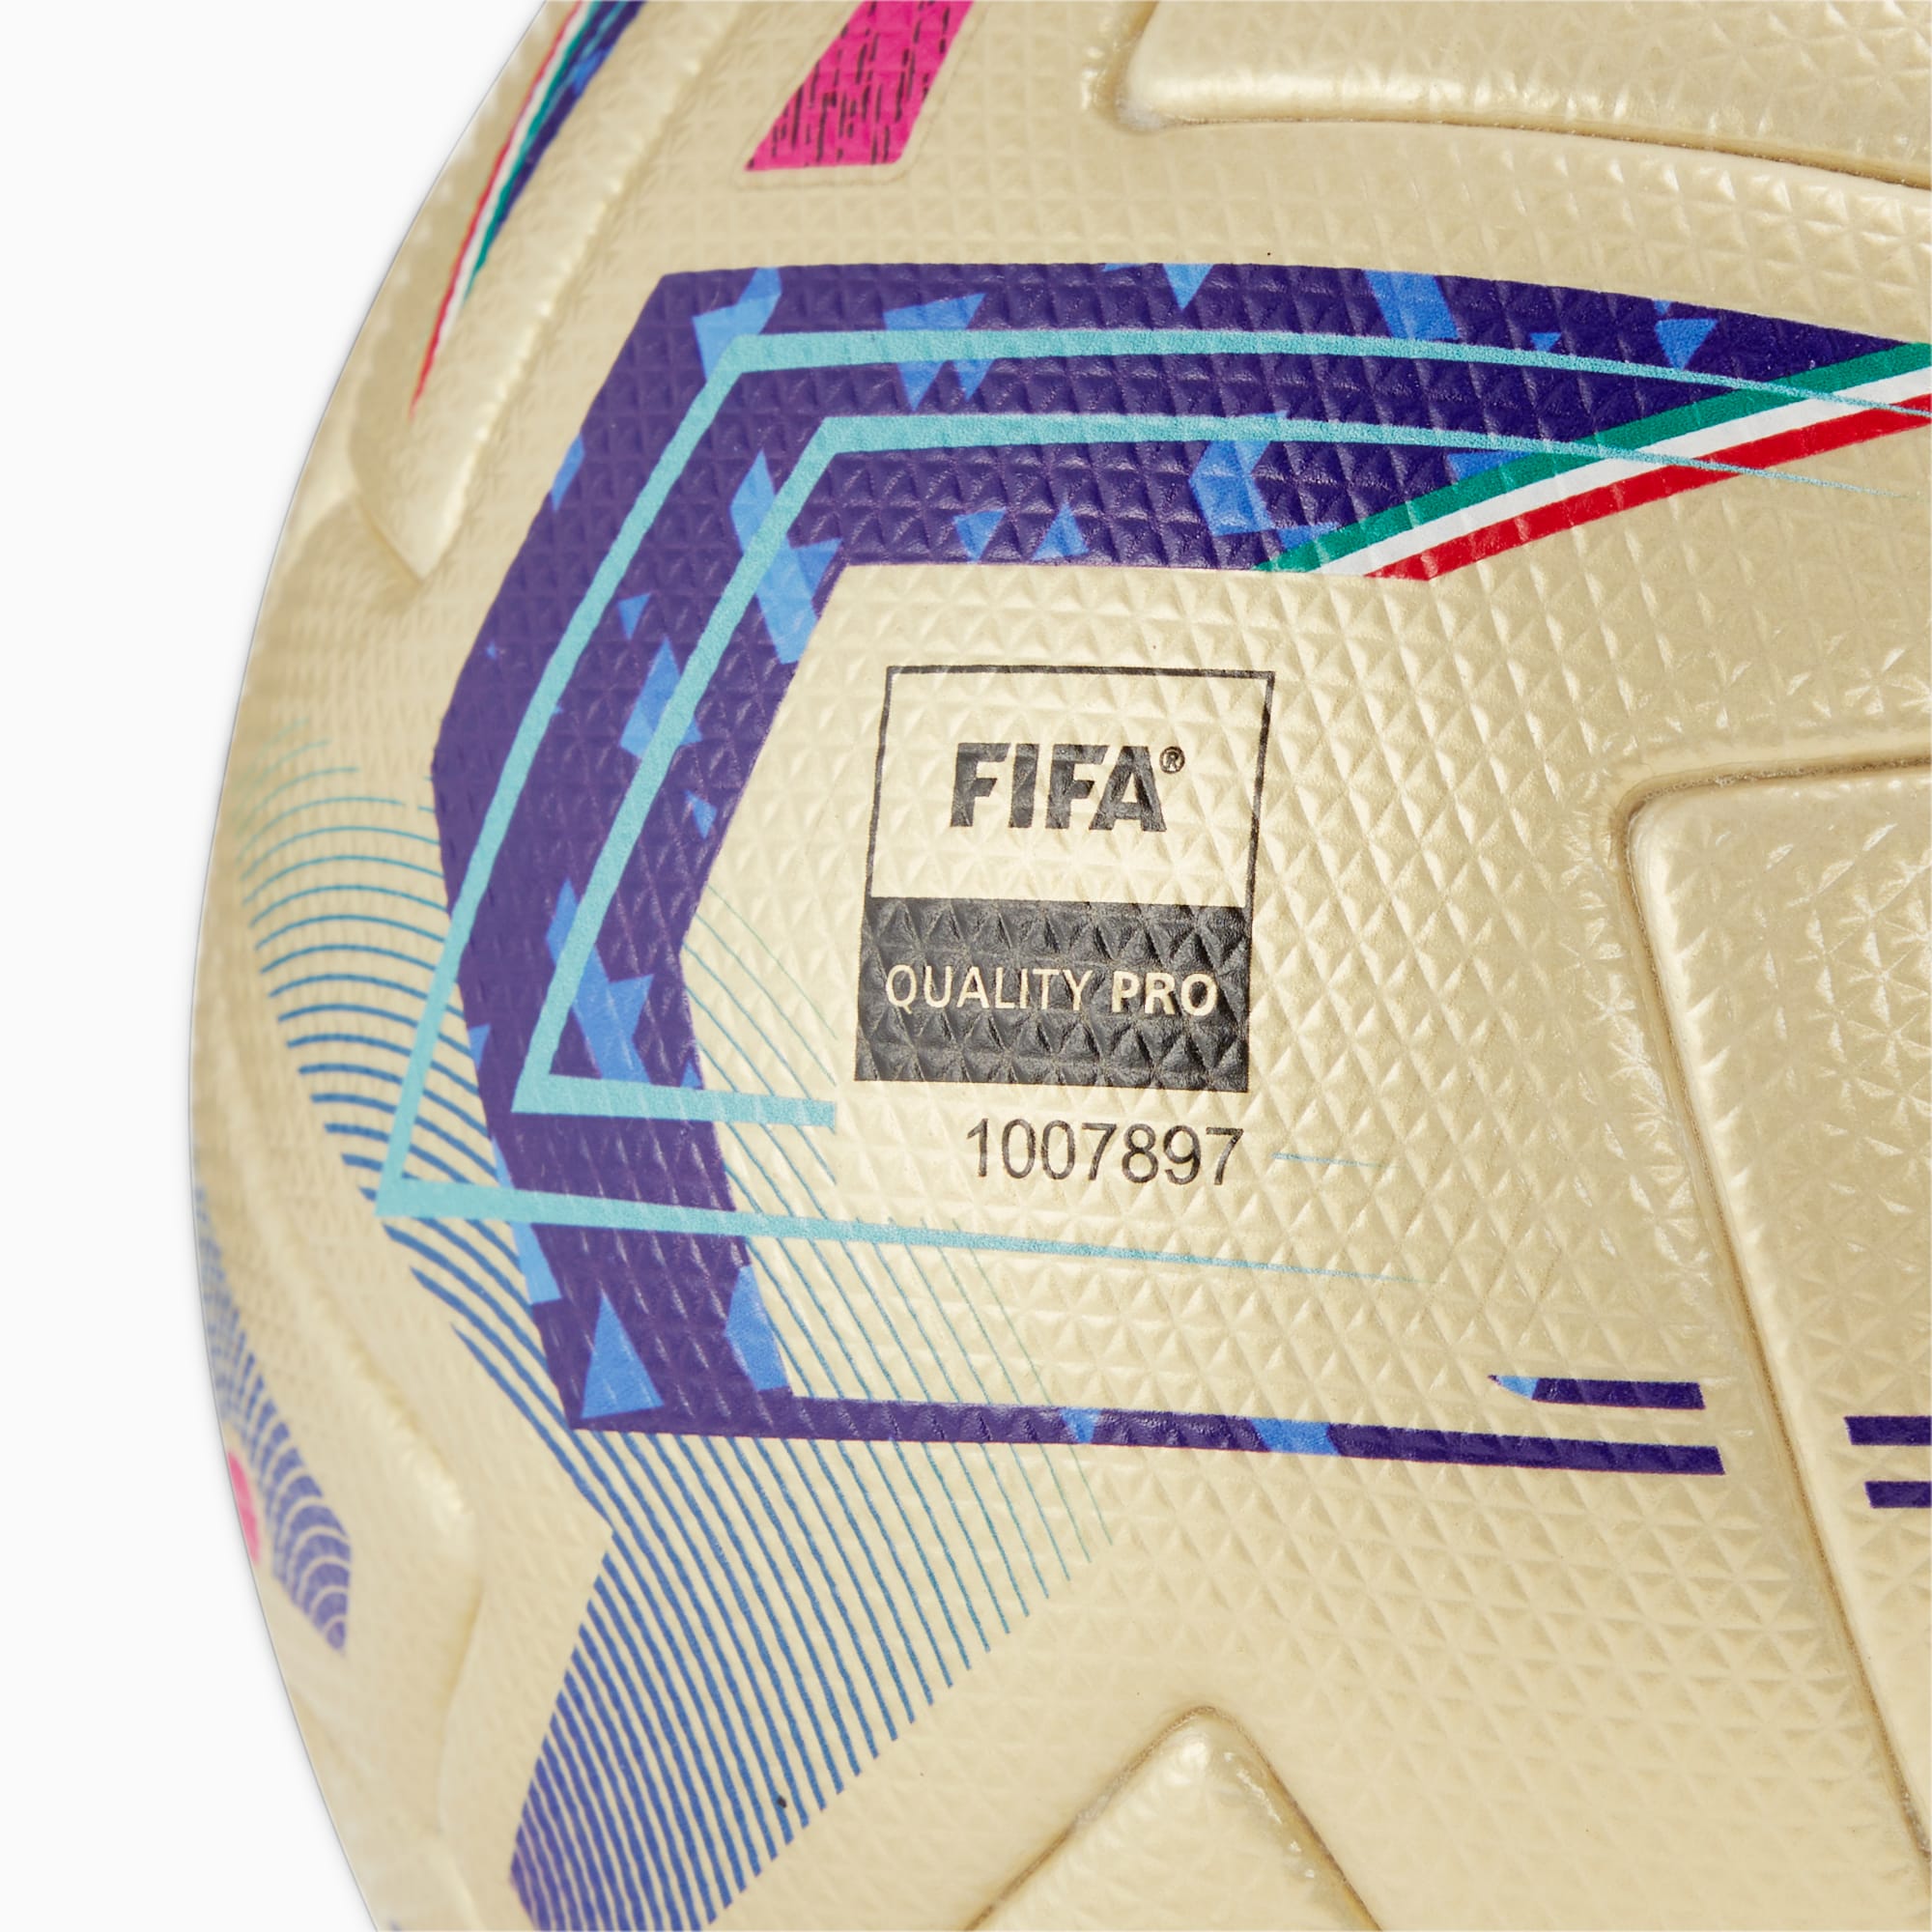 PUMA Serie A Special Edition FIFA Quality Pro Fußball, Gold/Blau, Größe: 5